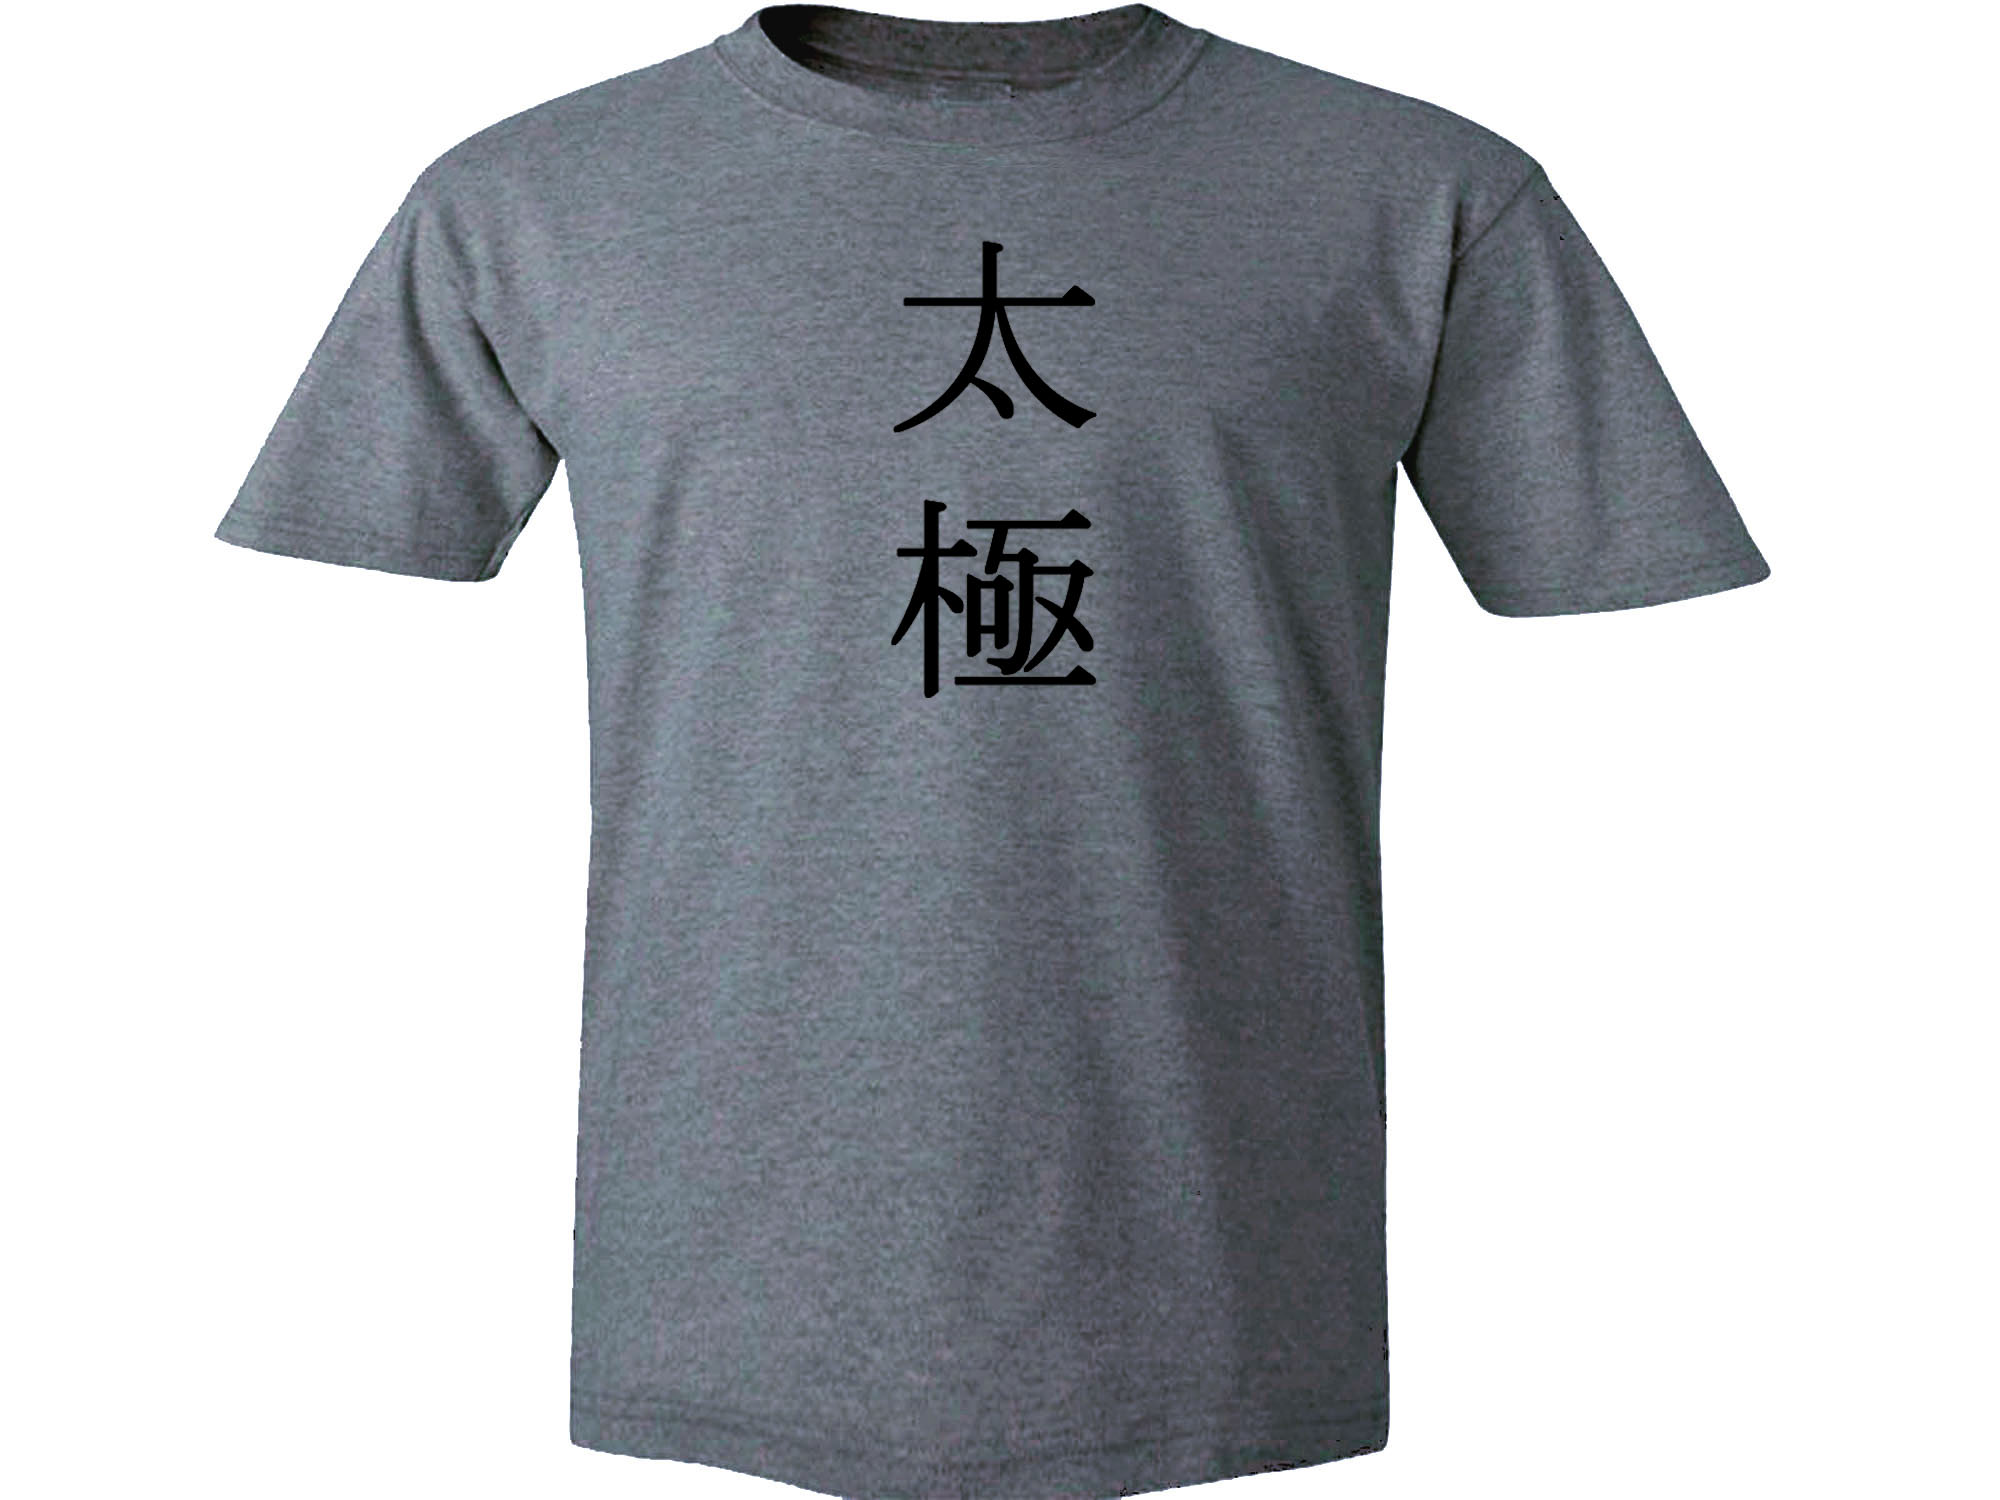 Tai Chi Martial arts 100% cotton graphic t-shirt